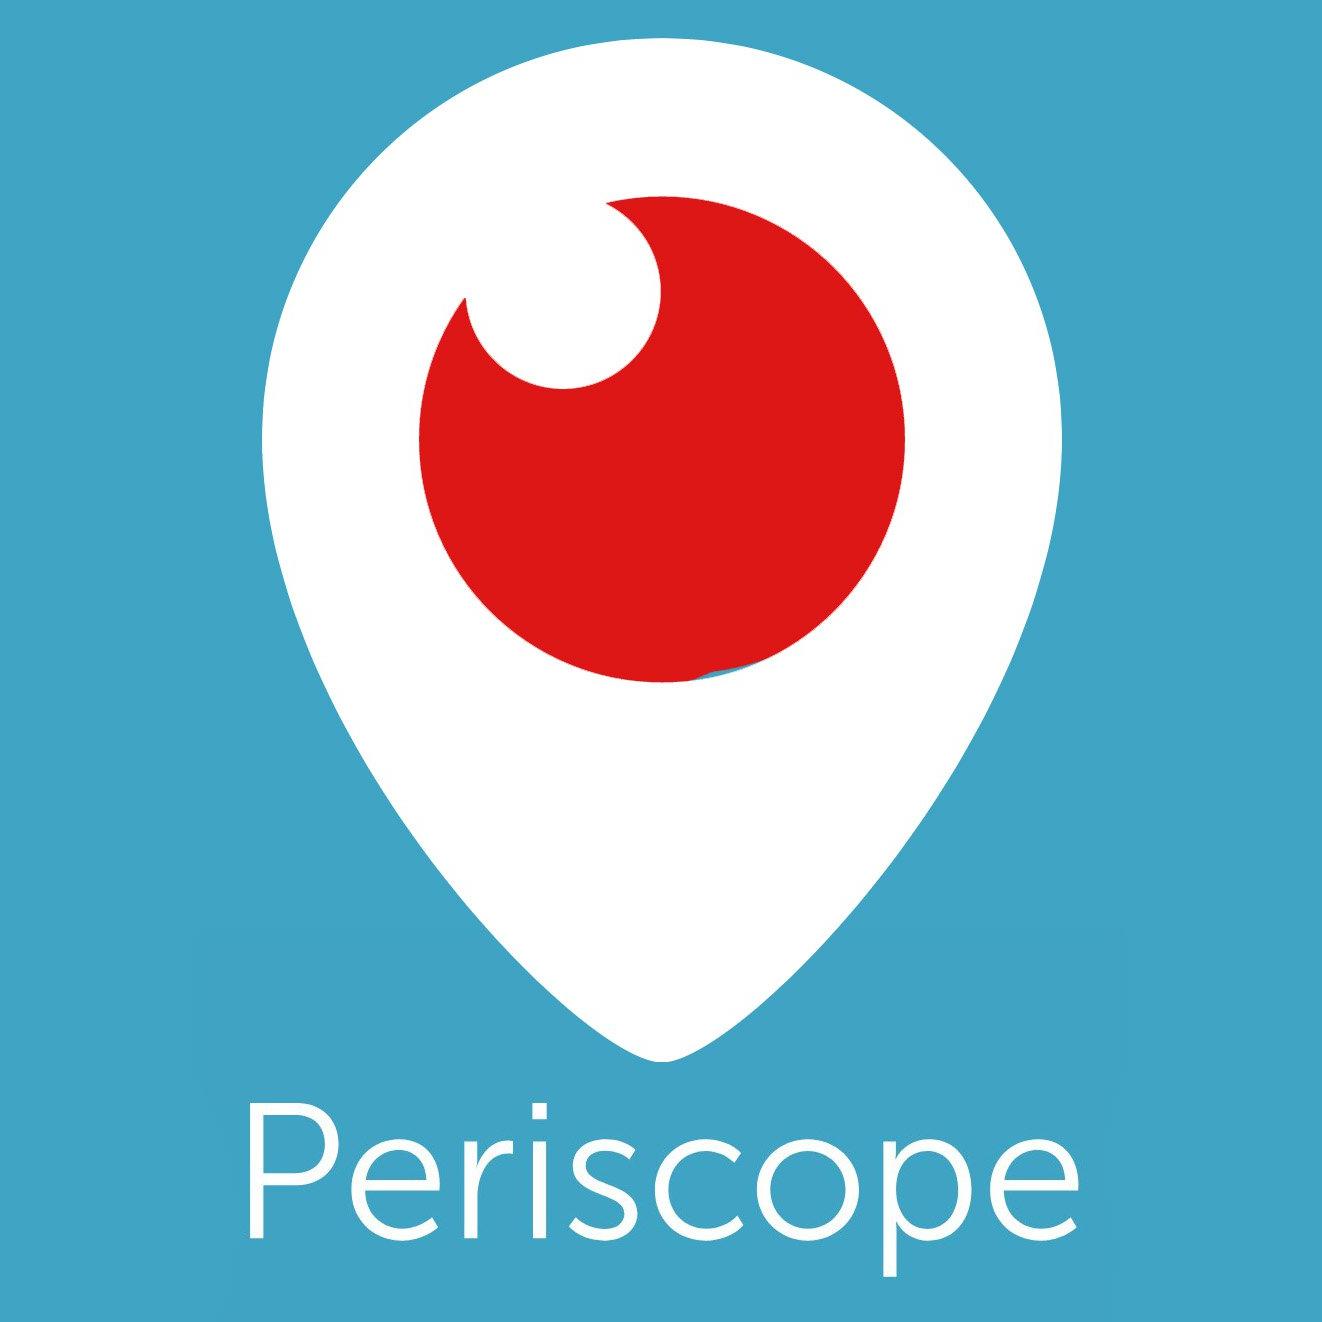 Periscope logo.